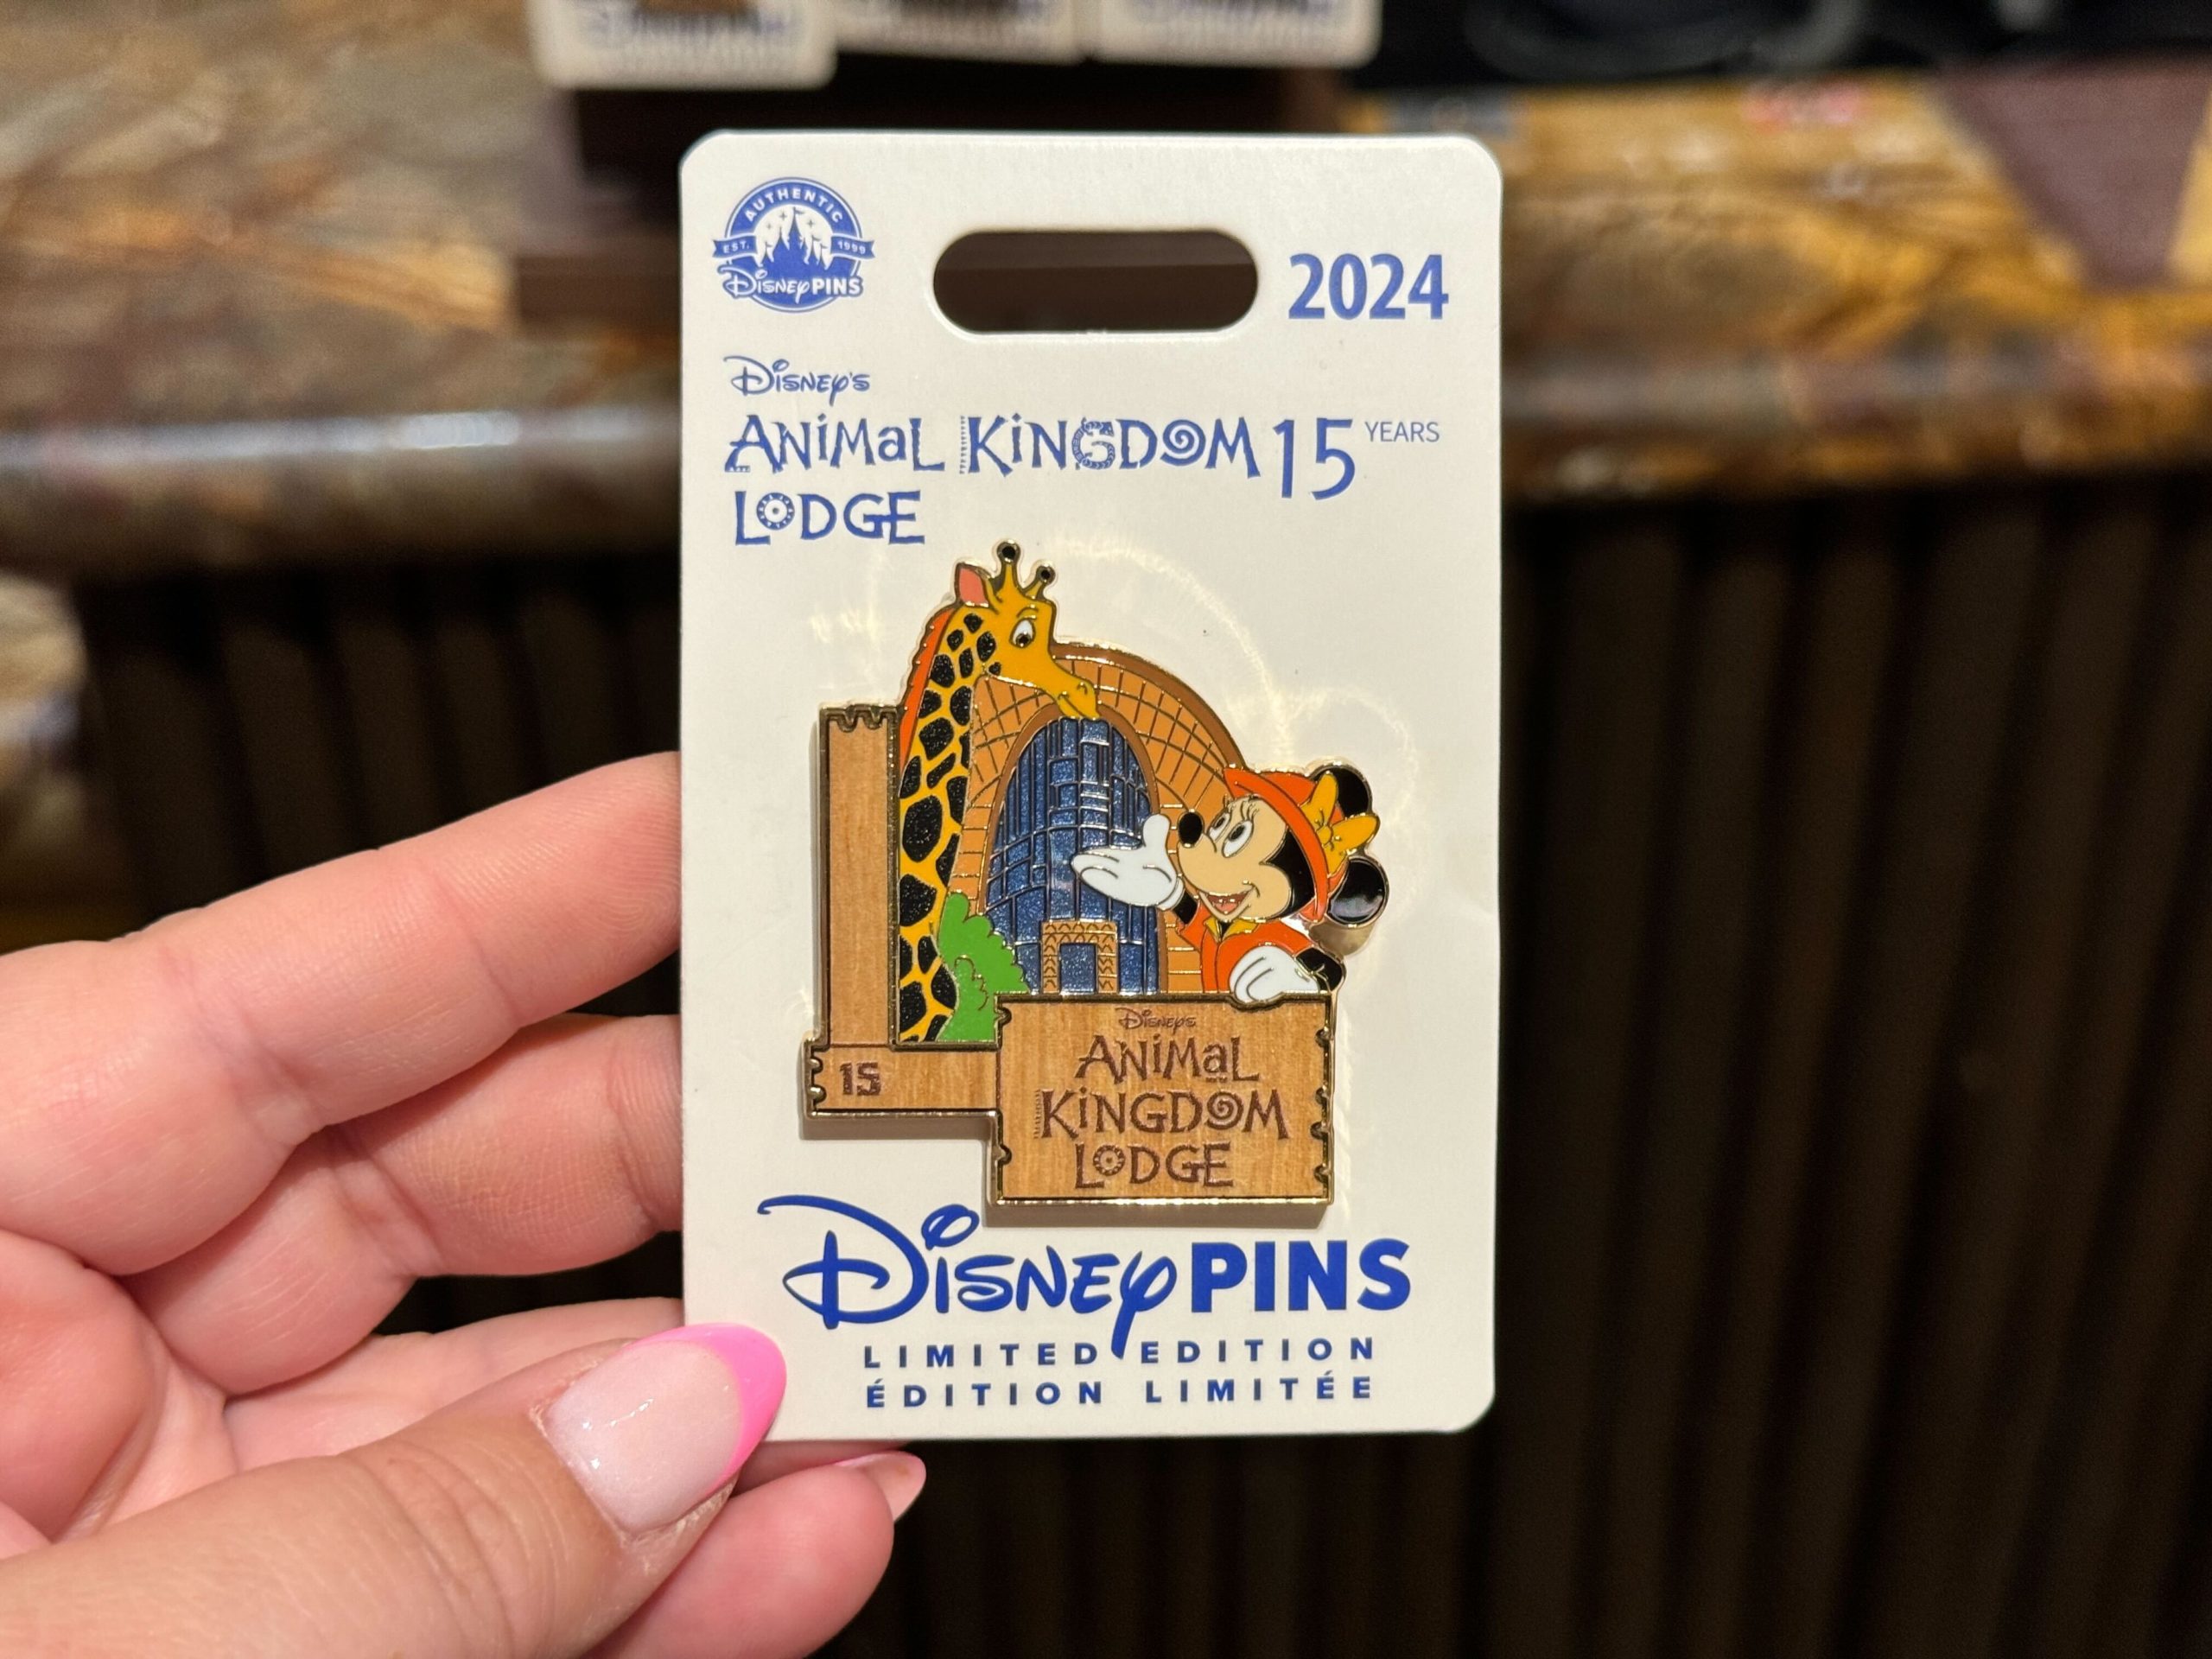 disney's animal kingdom lodge anniversary pin